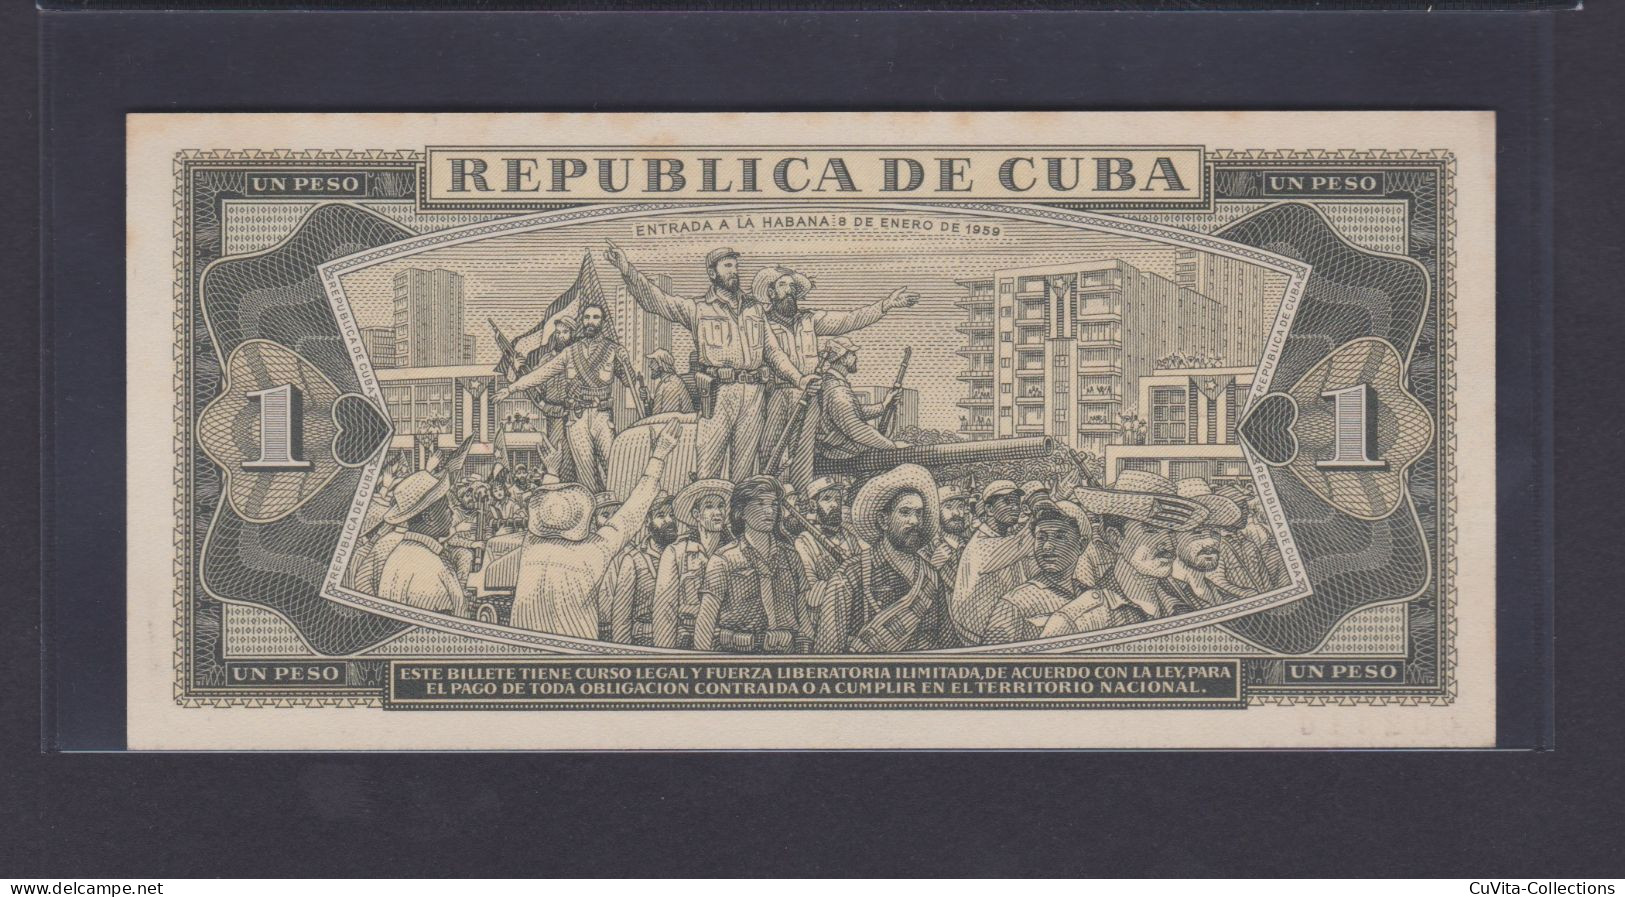 1 PESO 1968 UNC / SC SPECIMEN - Cuba